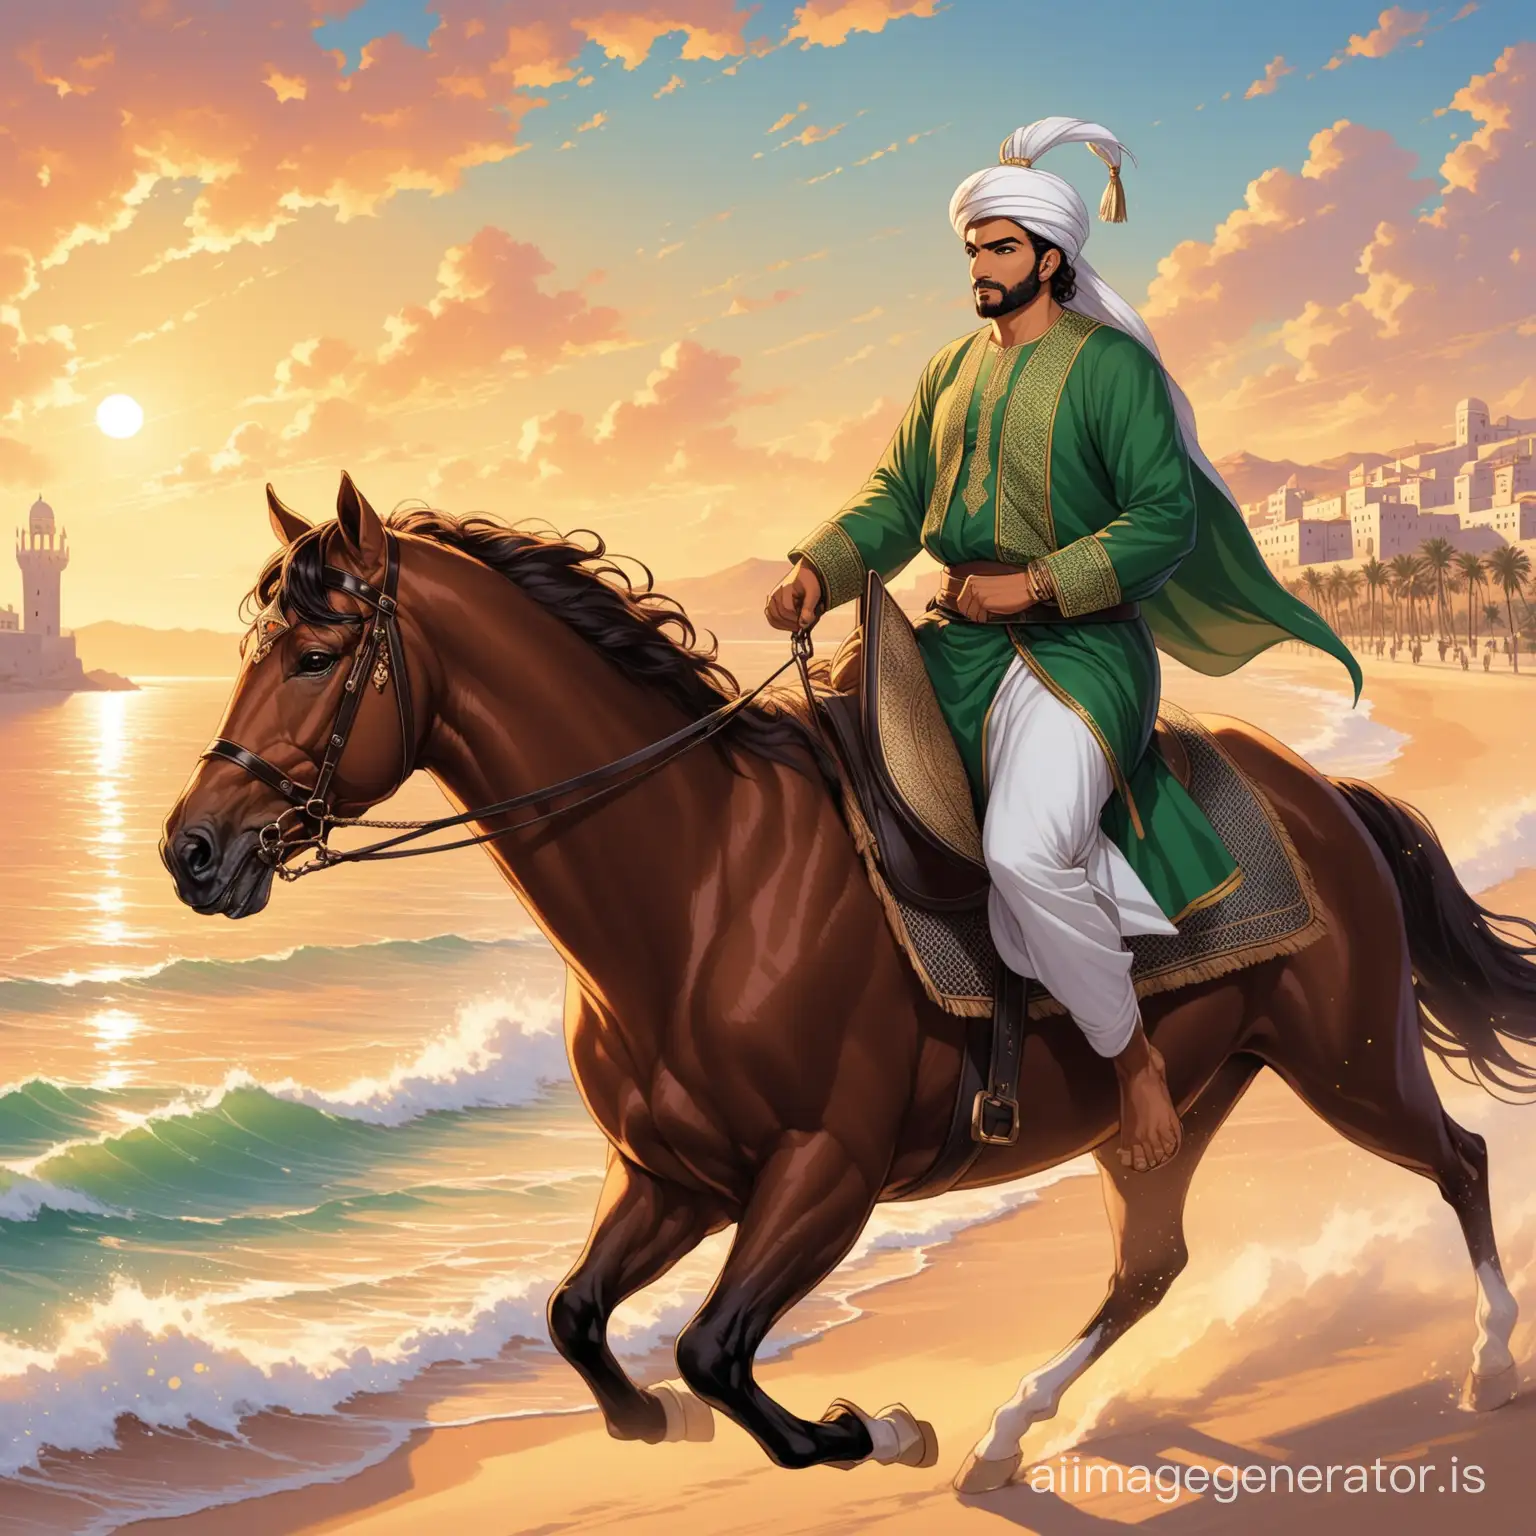 Legendary entry of Tariq bin Zayad into Spain.